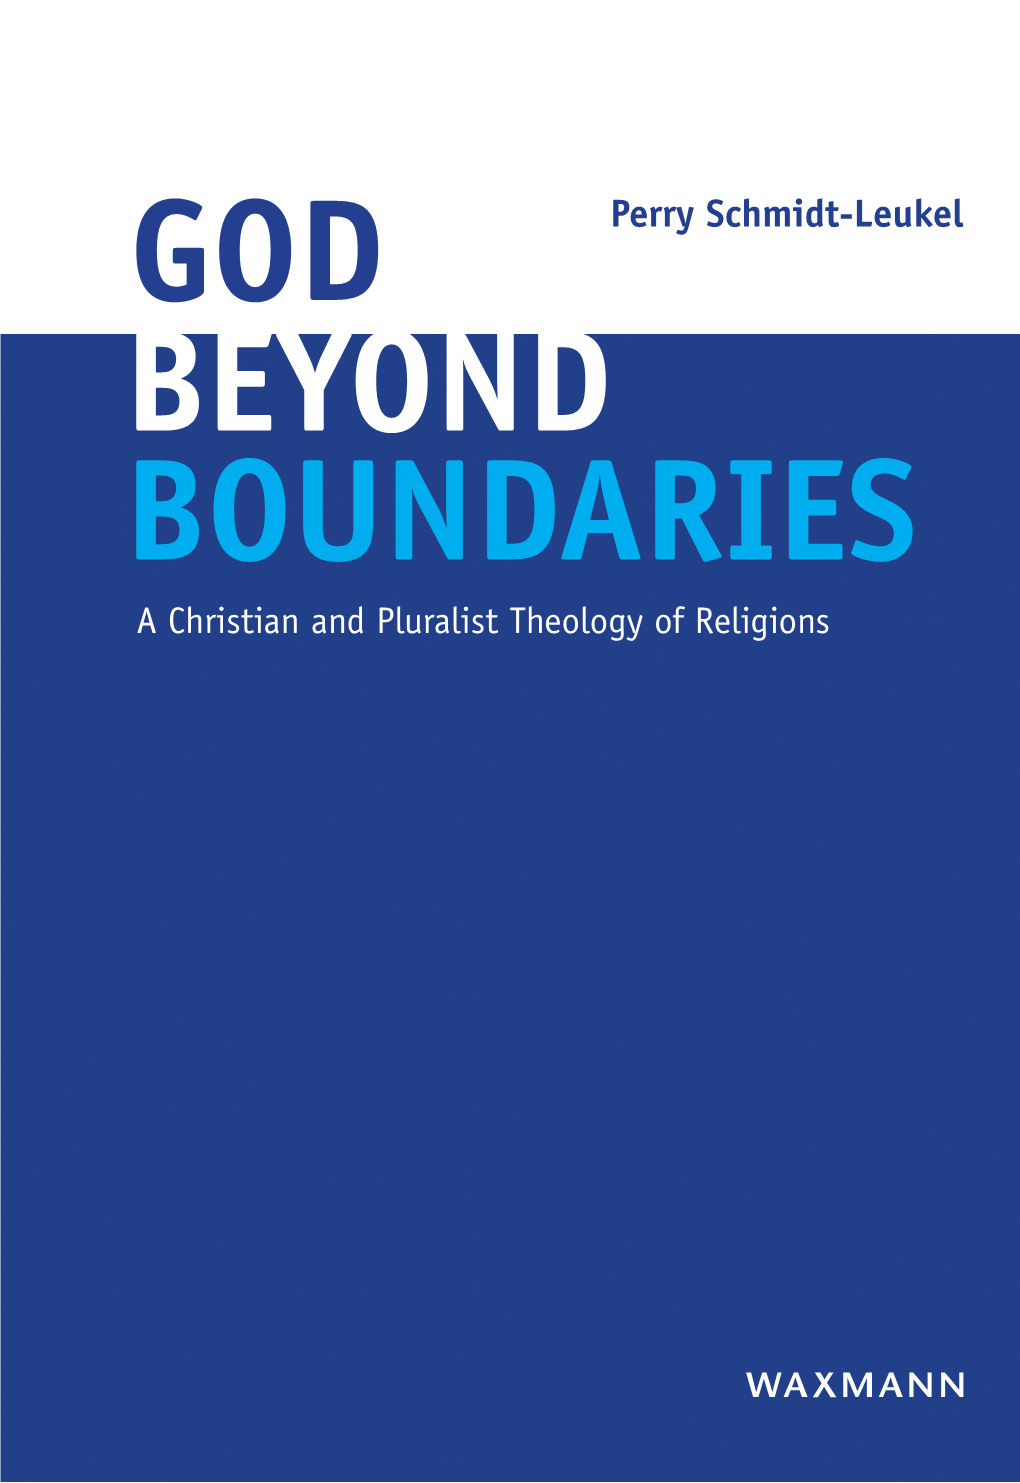 A Christian and Pluralist Theology of Religions © Waxmann Verlag Gmbh